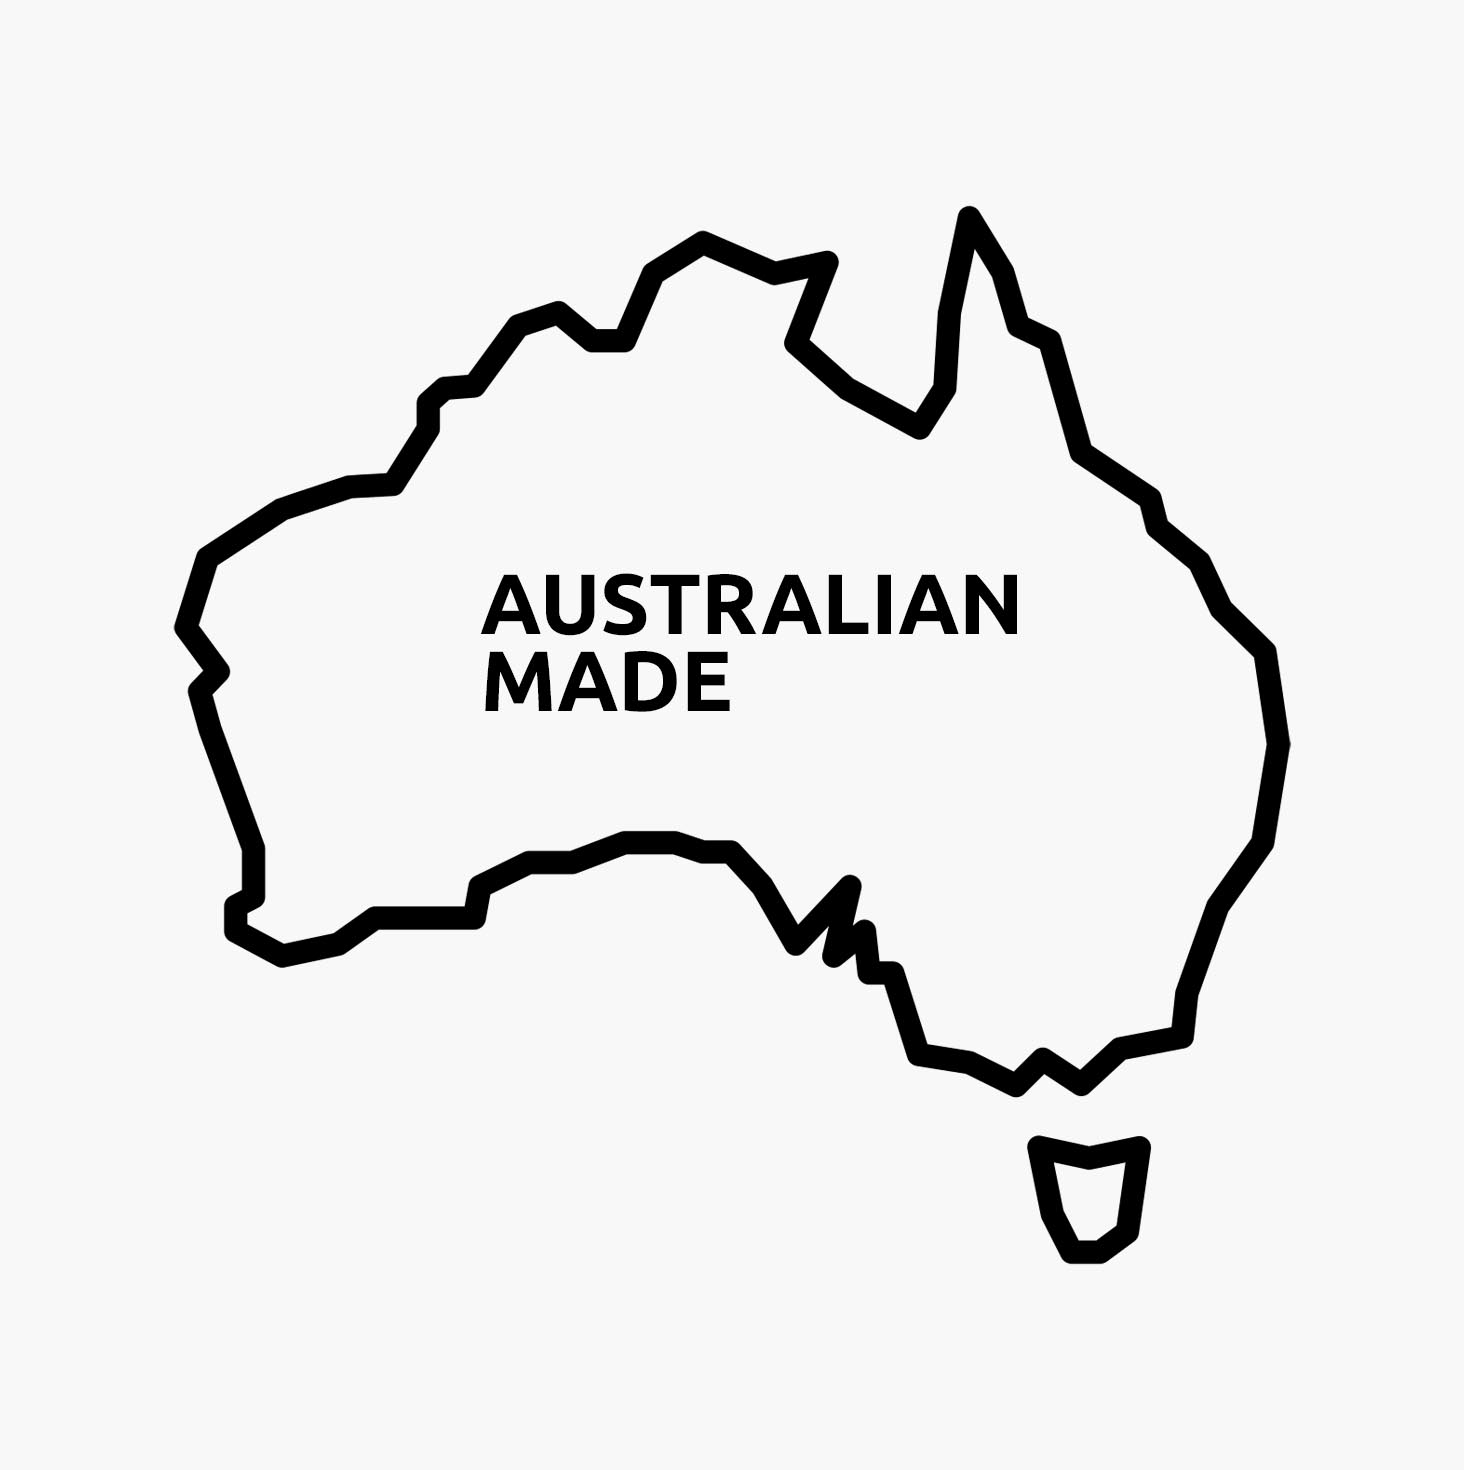 Australian Made image